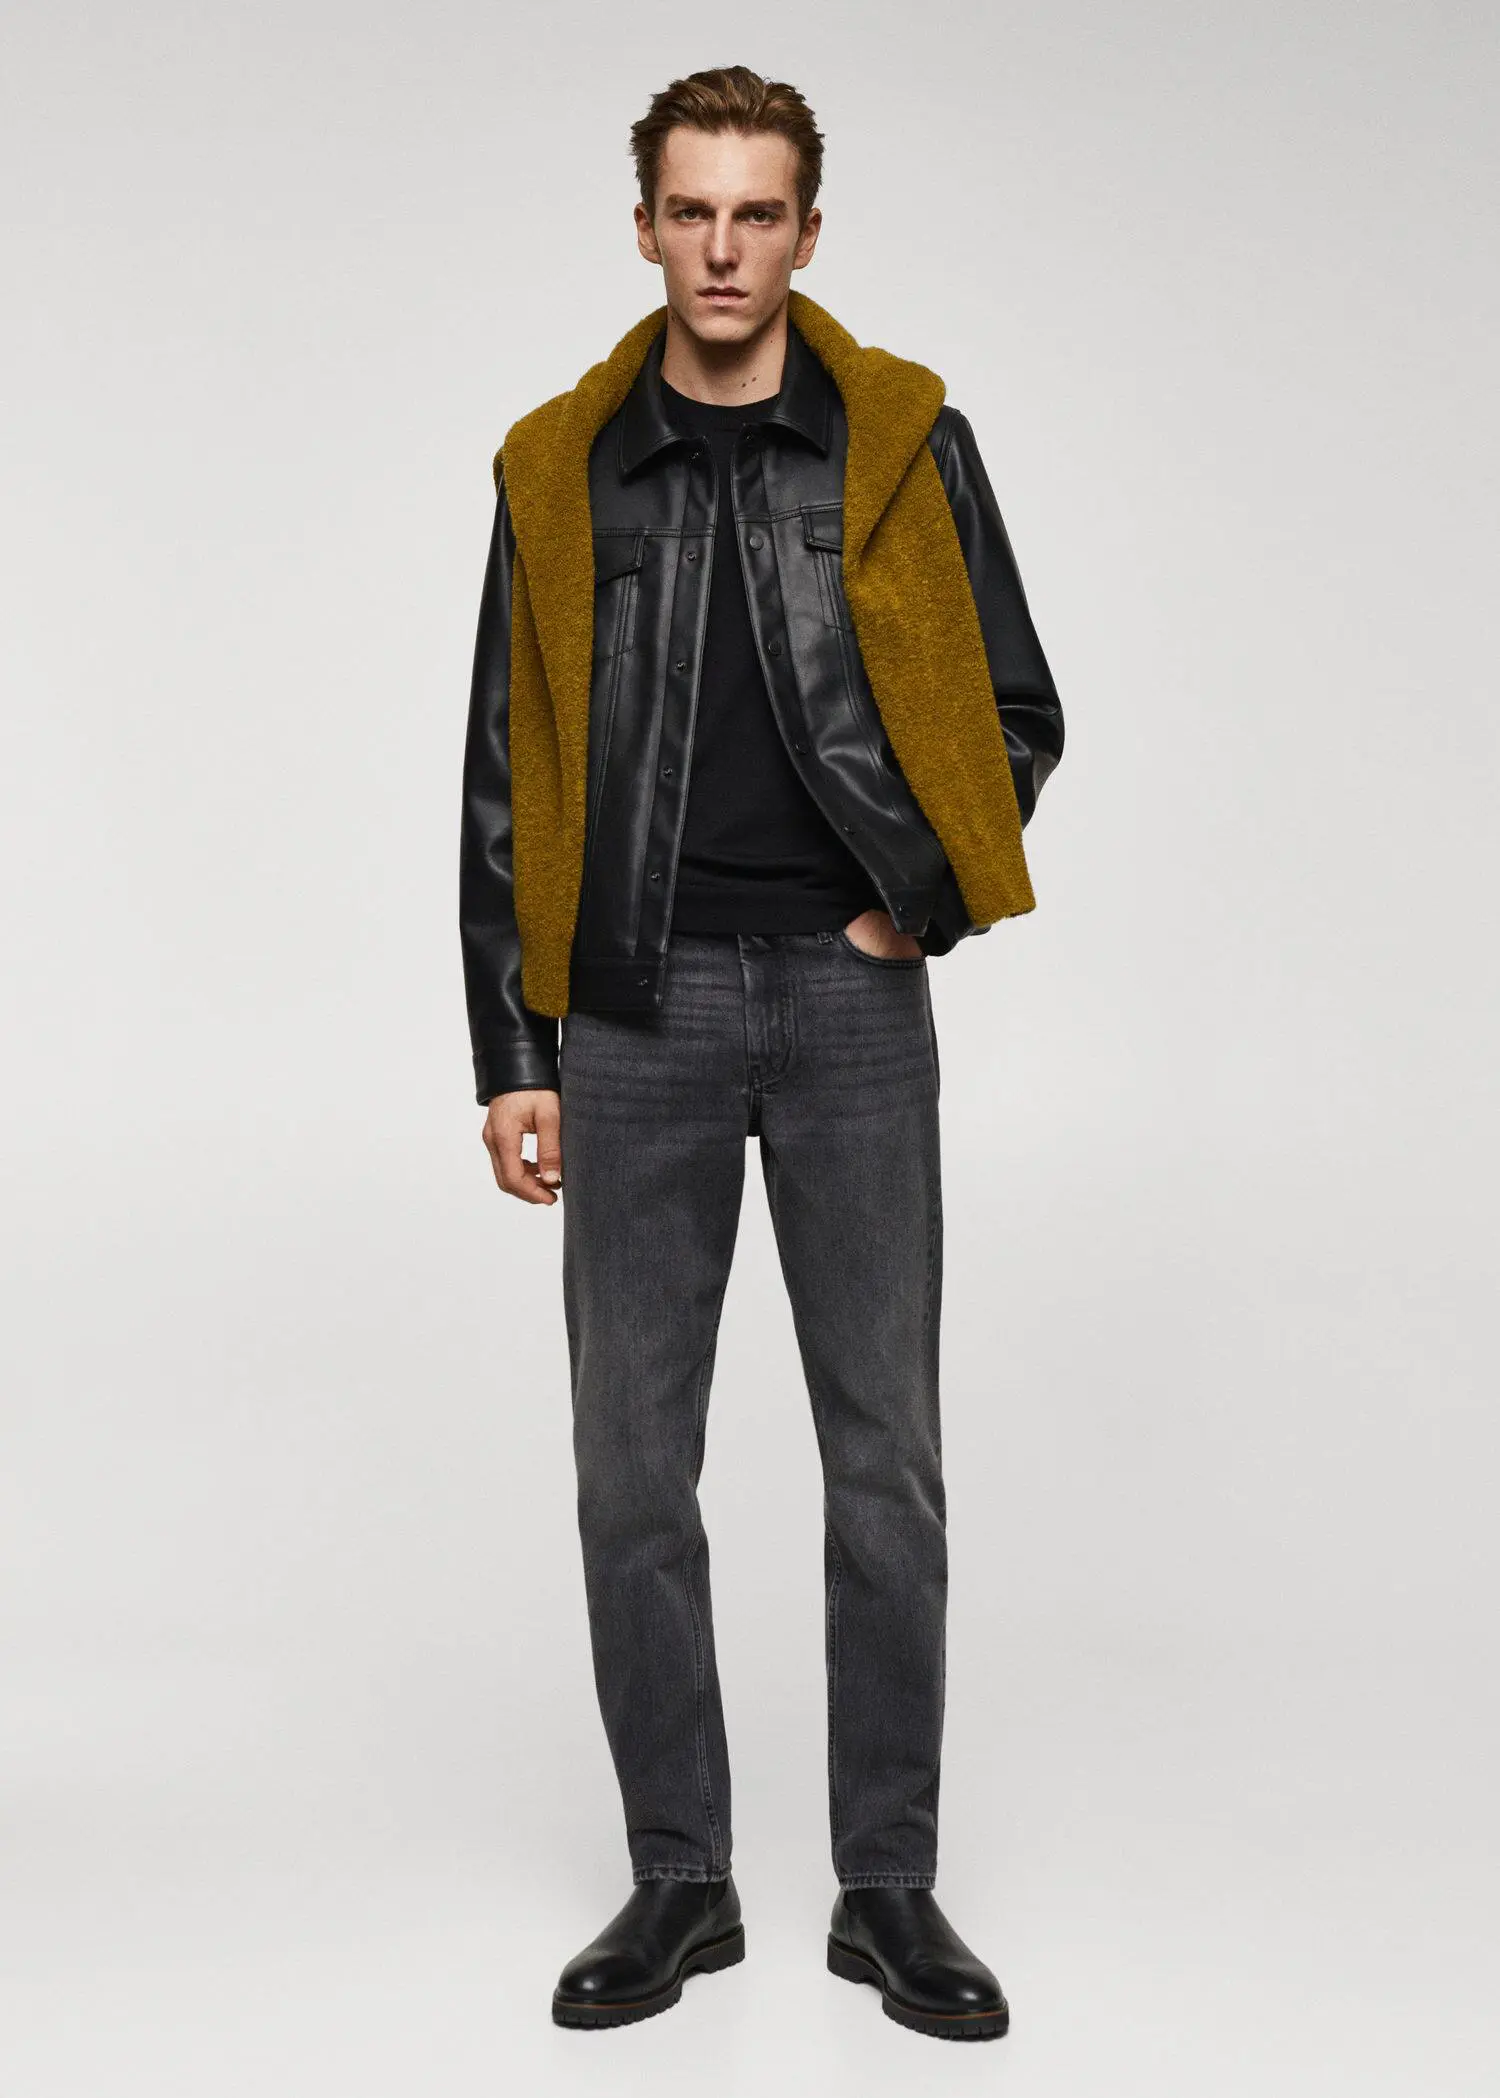 Mango Faux leather jacket with pockets. 2